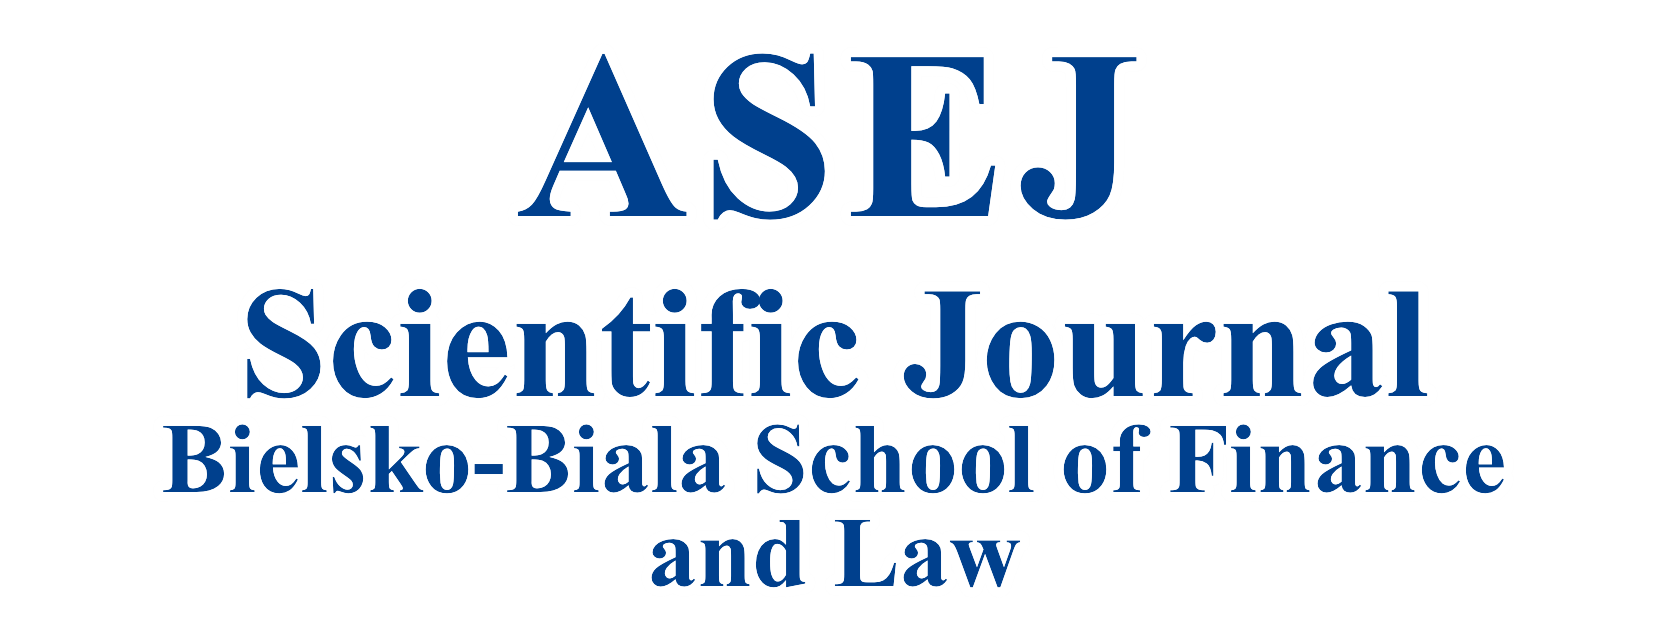 Logo of the ASEJ Journal